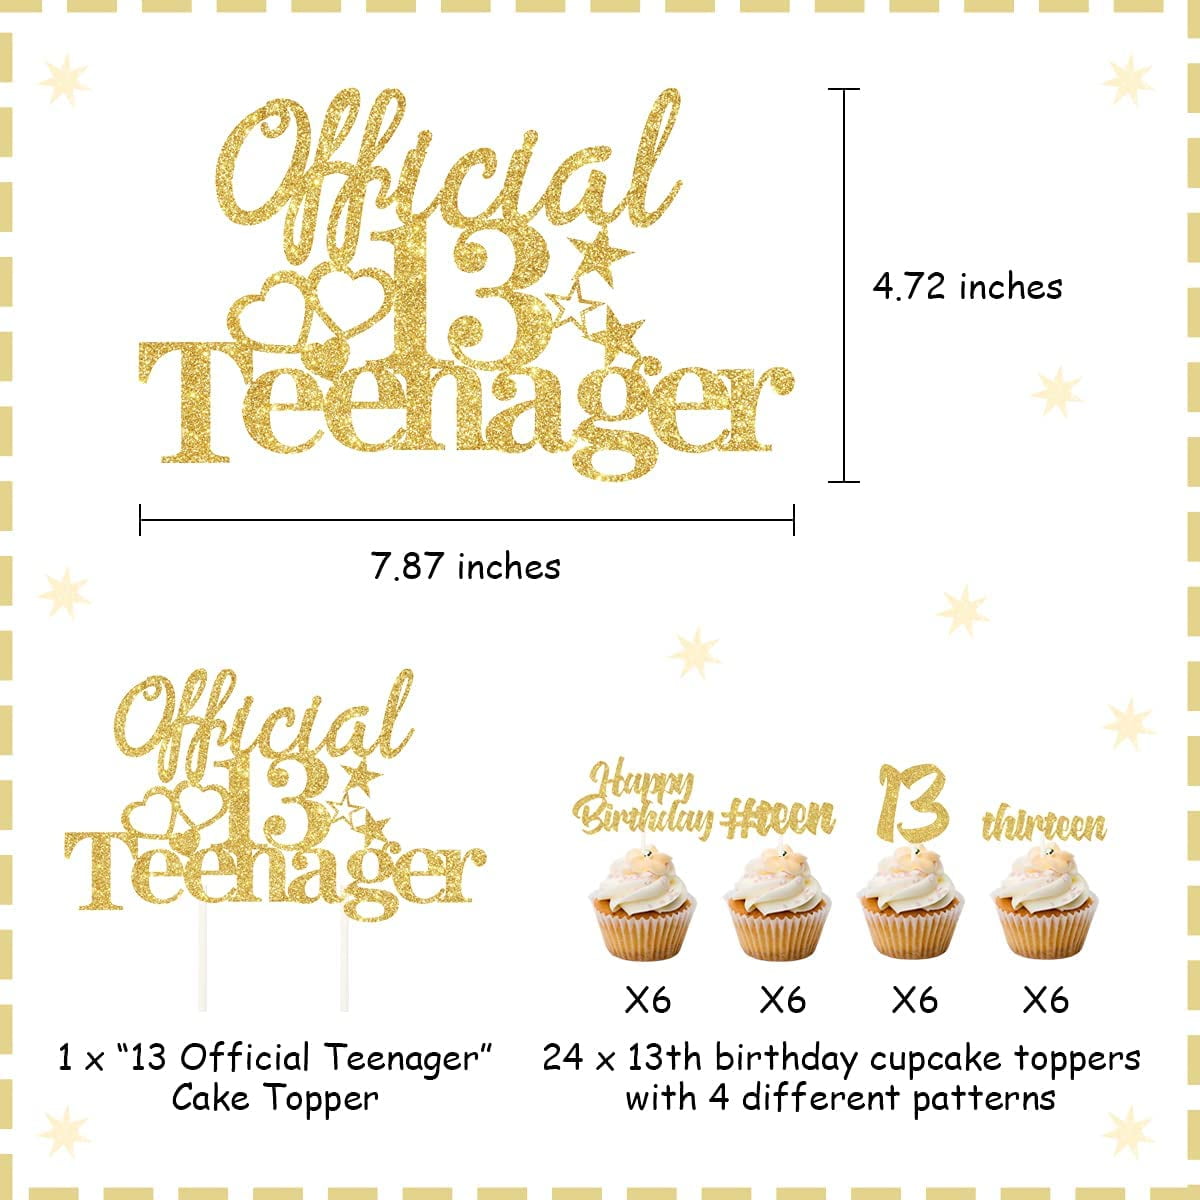 25 Pcs Official Teenager 13 Cake Topper for 13th Birthday Party Decorations  Happy 13th Birthday Party Decorations Rose Gold Glitter. -